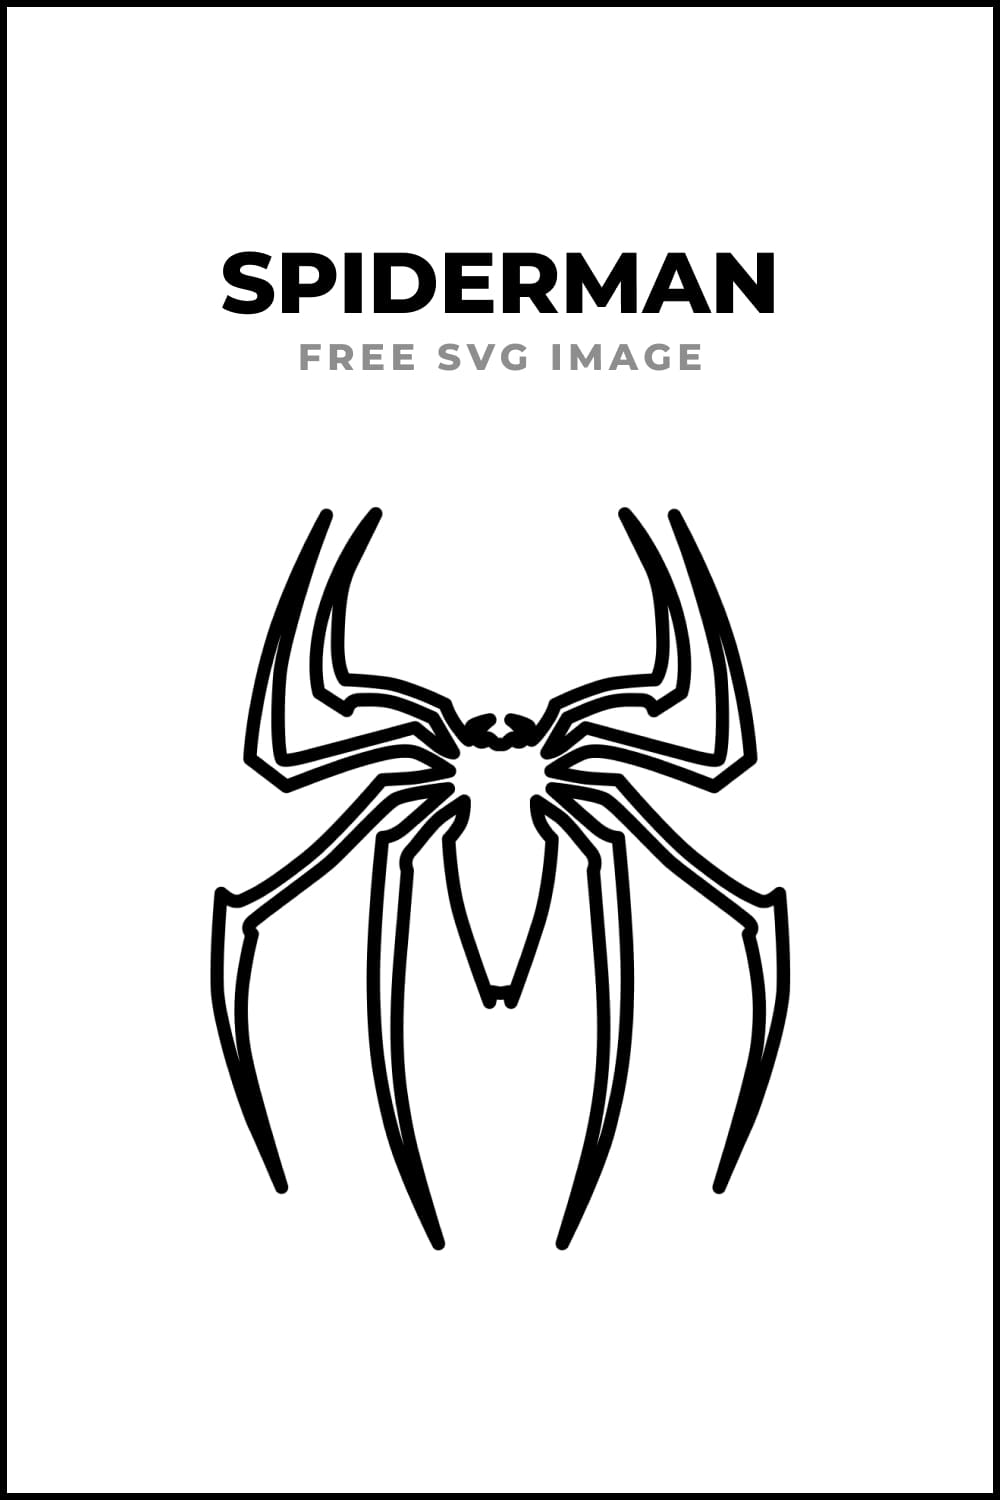 Spiderman logo in view of spider SVG.